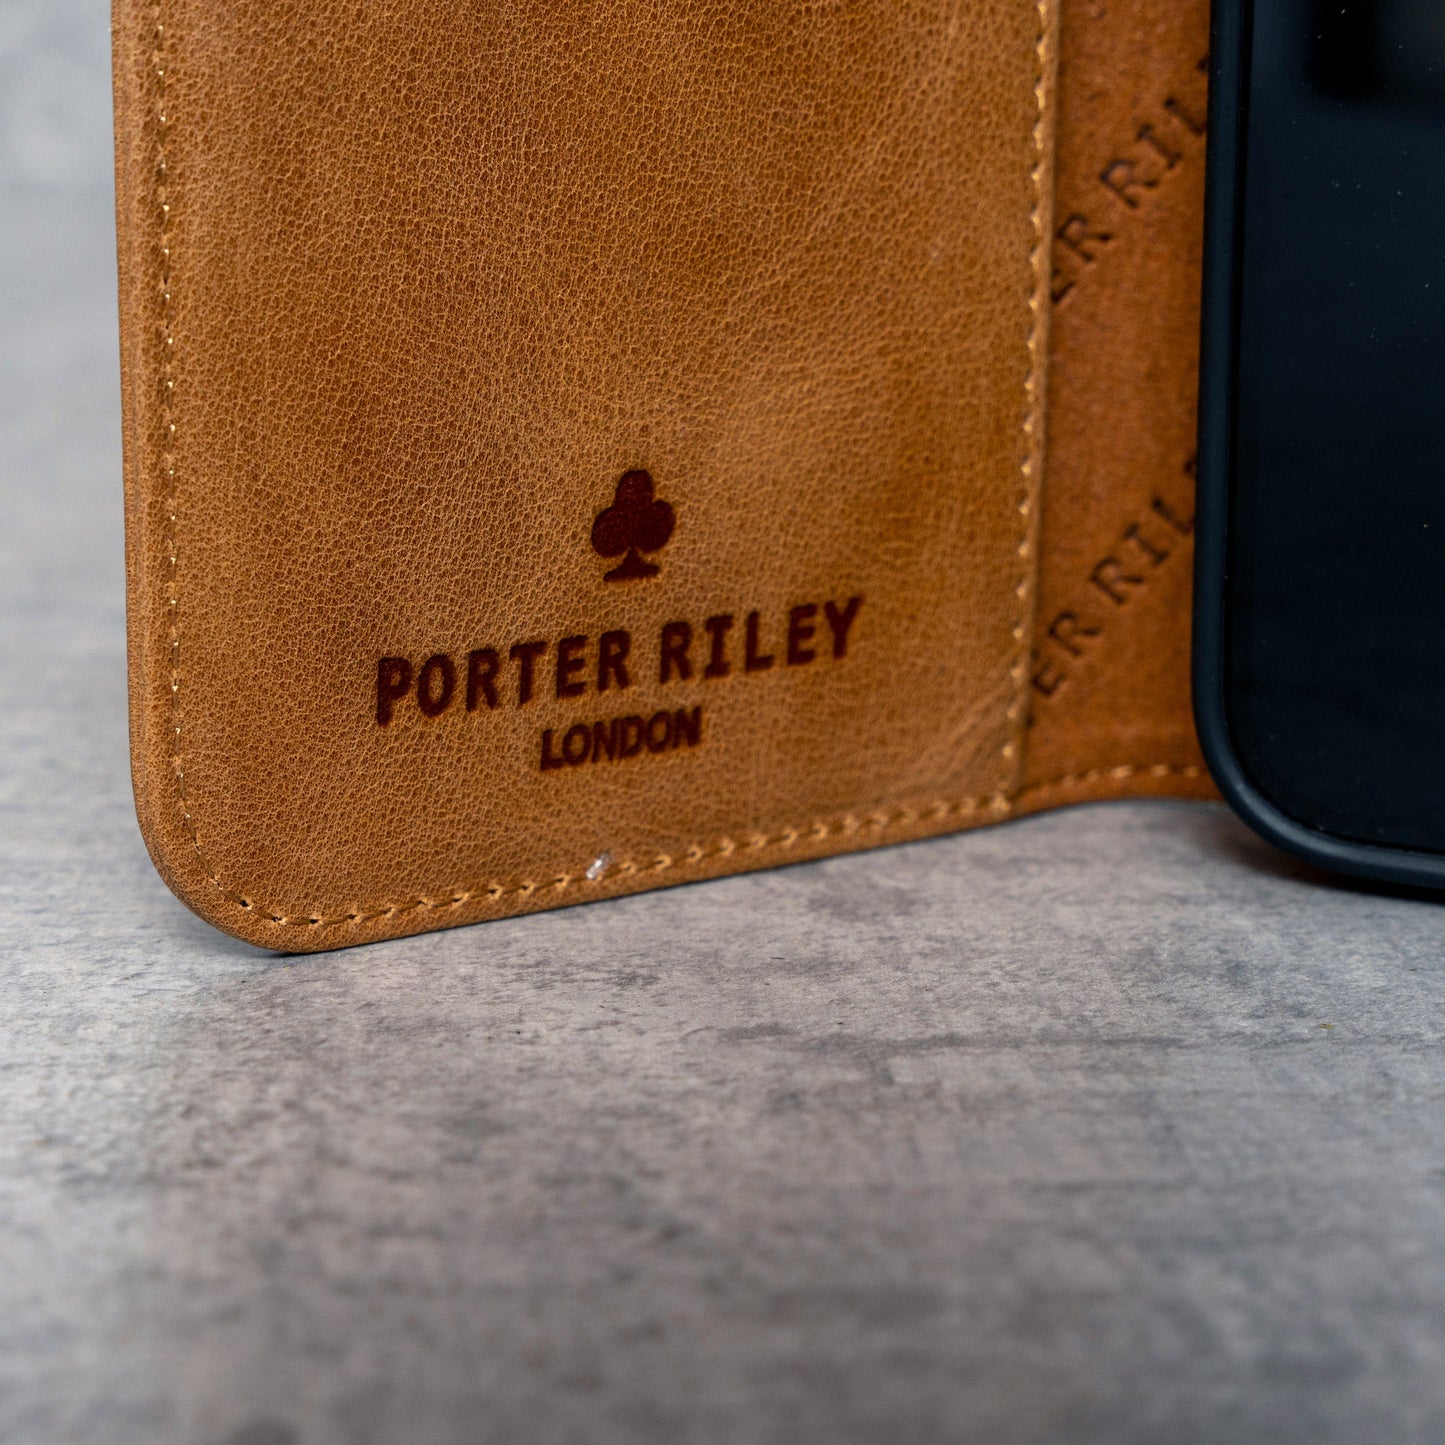 HTC U11 Leather Case. Premium Slim Genuine Leather Stand Case/Cover/Wallet (Tan)